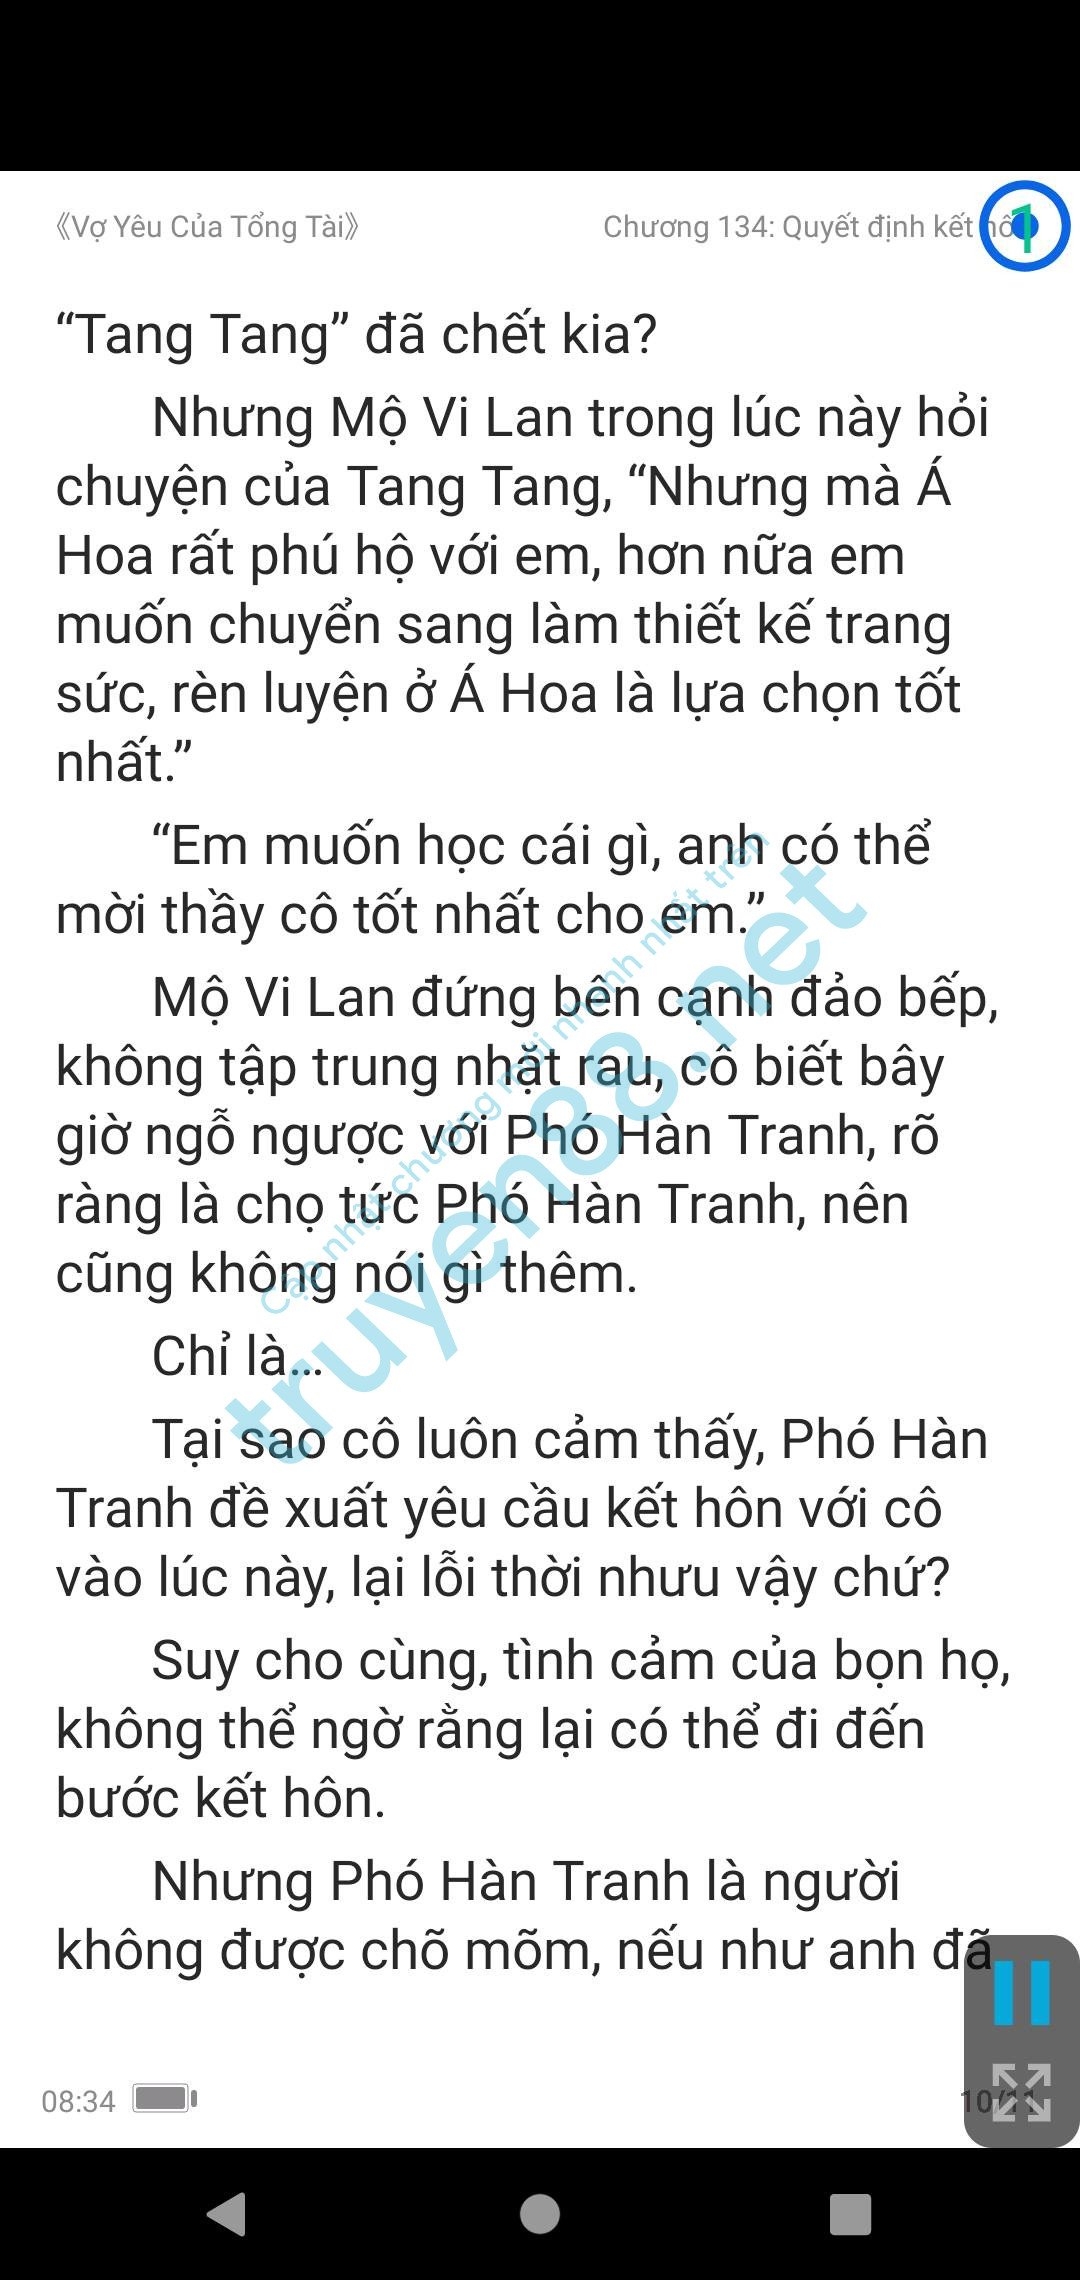 vo-yeu-cua-tong-tai-mo-vi-lan--pho-han-tranh-134-2